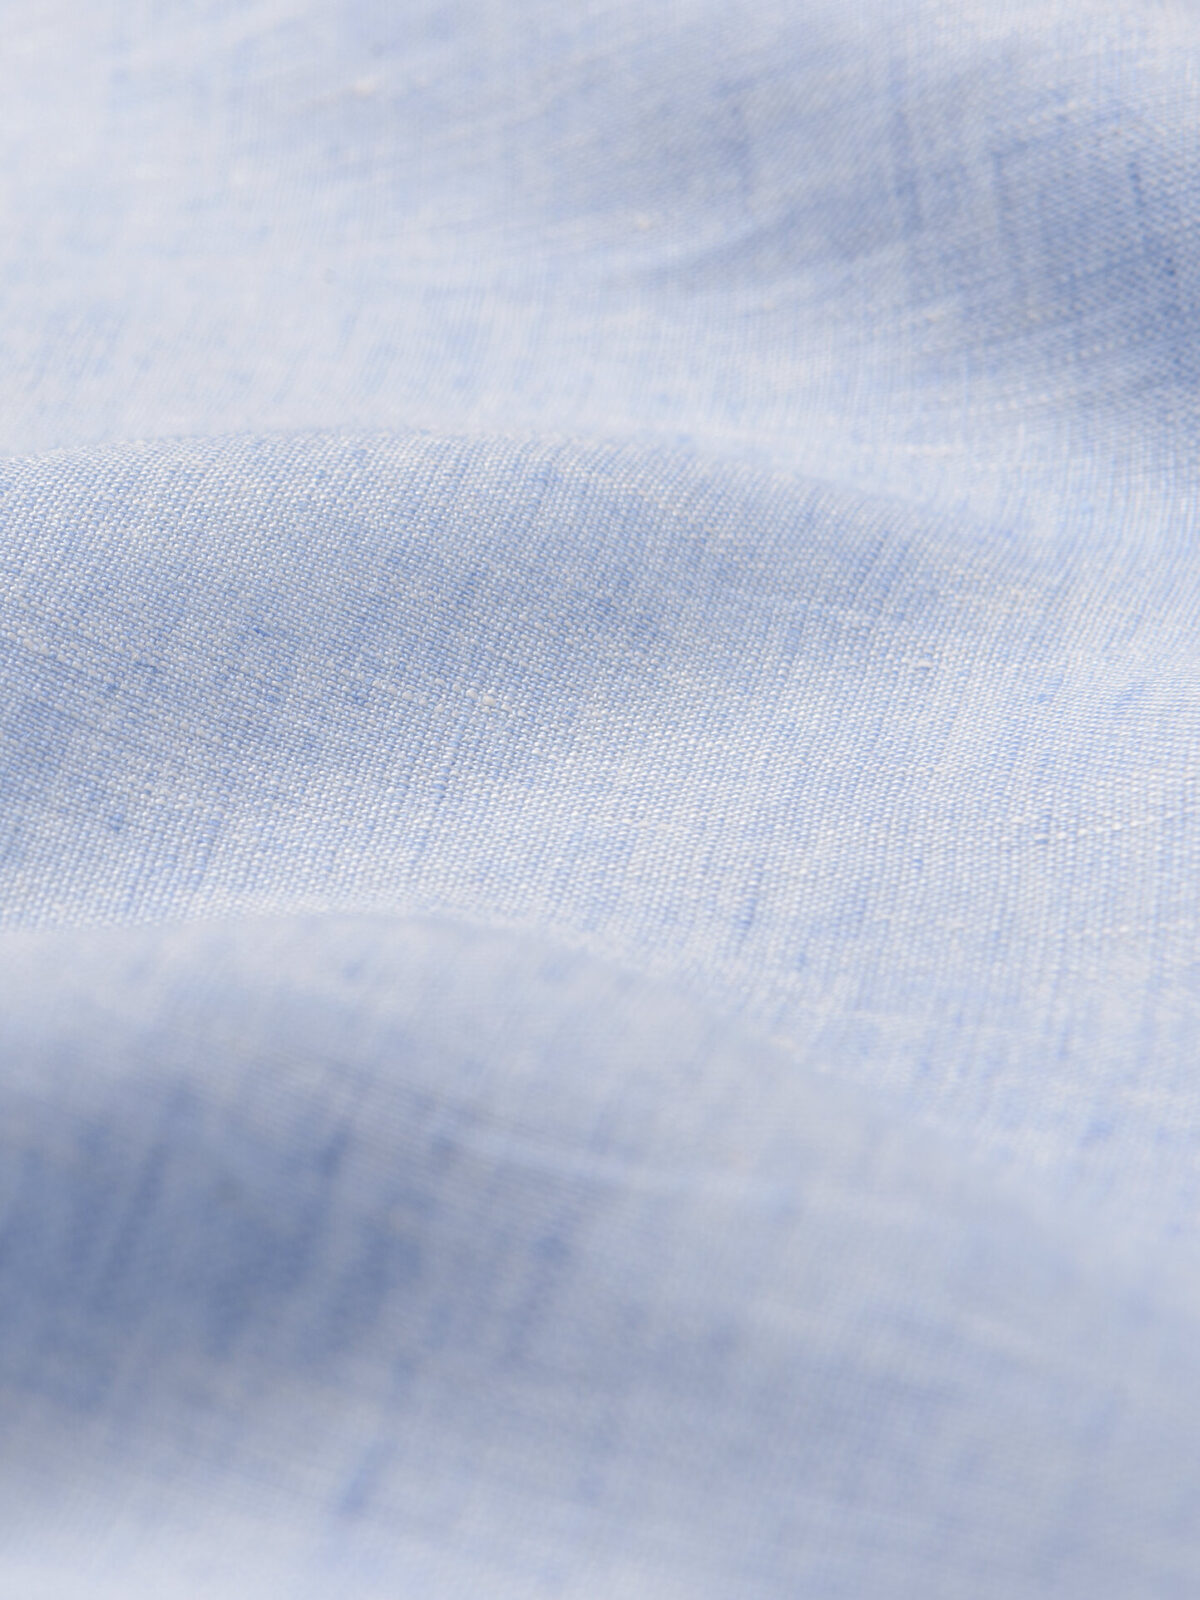 Positano Light Blue Italian Linen Shirts by Proper Cloth